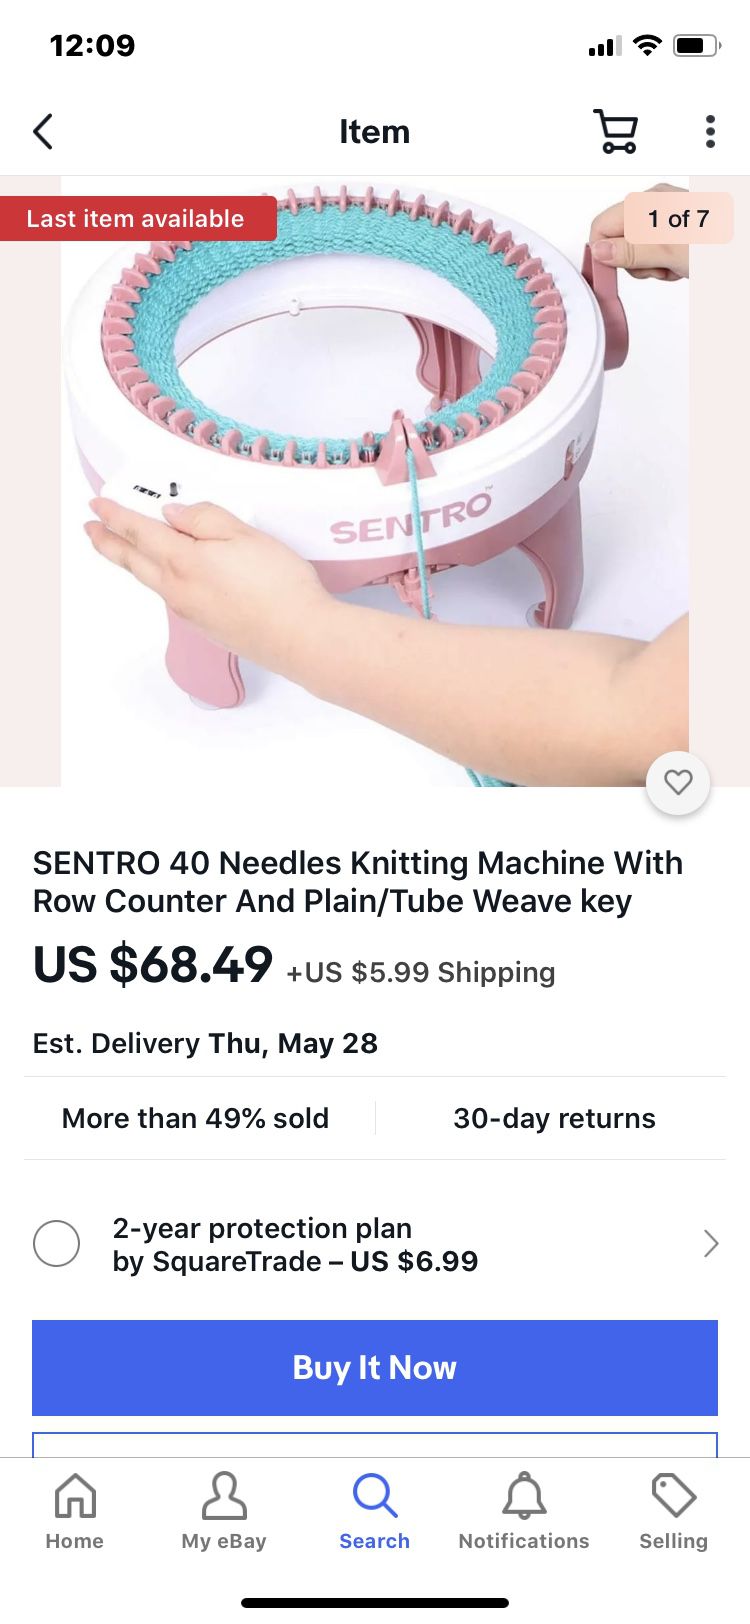 SENTRO 40 Needles Knitting Machine With Row Counter And Plain/Tube